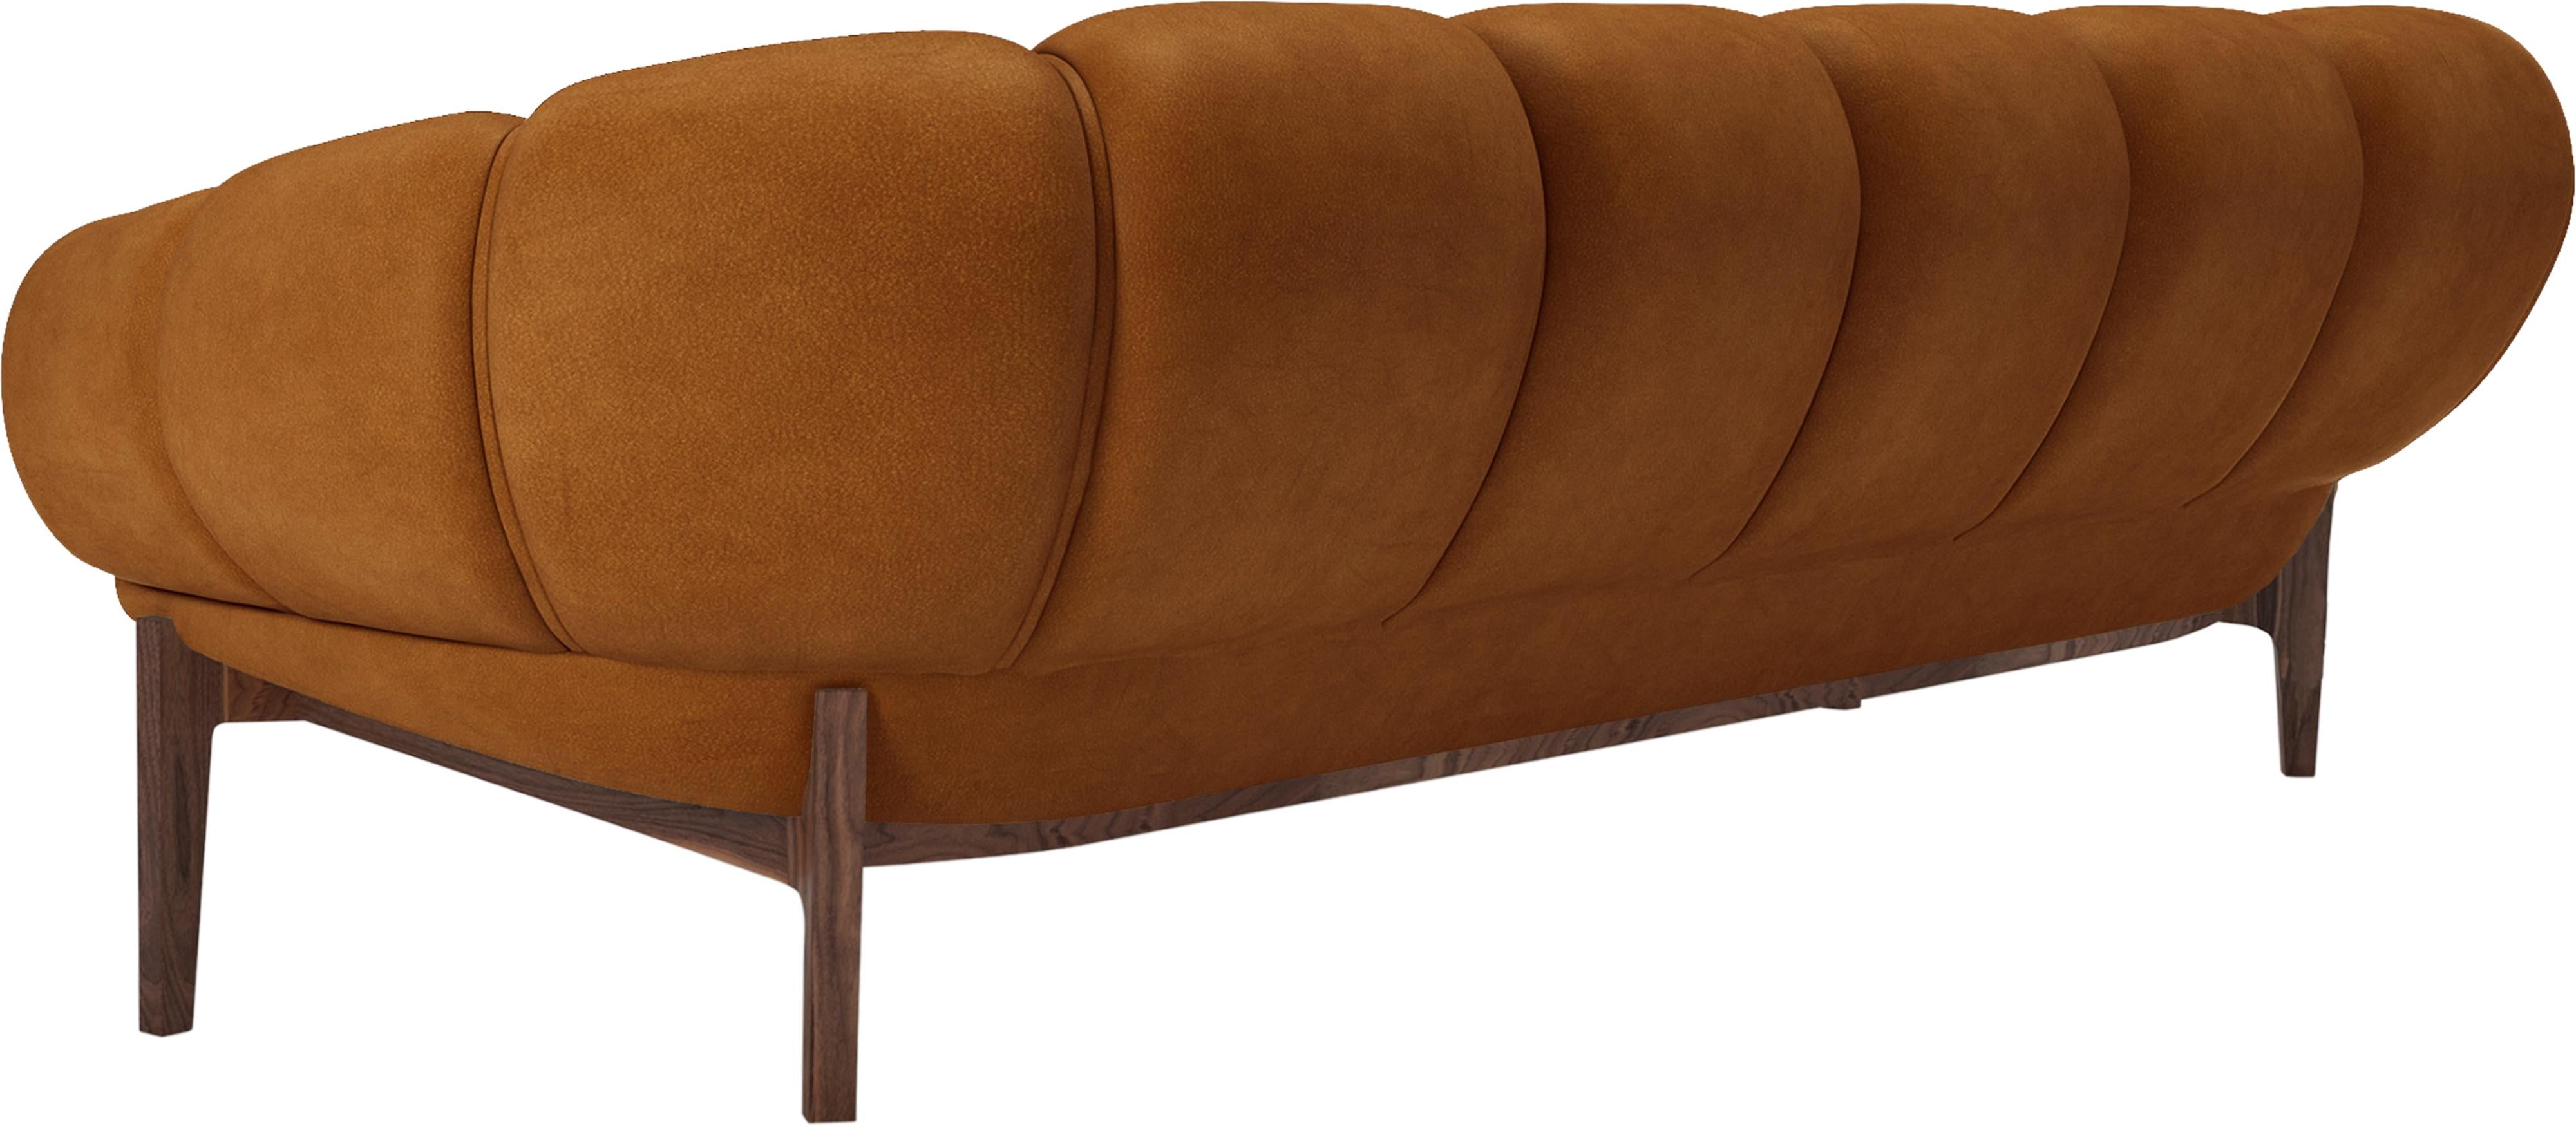 Leather 'Croissant' Sofa by Illum Wikkelsø for Gubi with Oak Legs For Sale 5